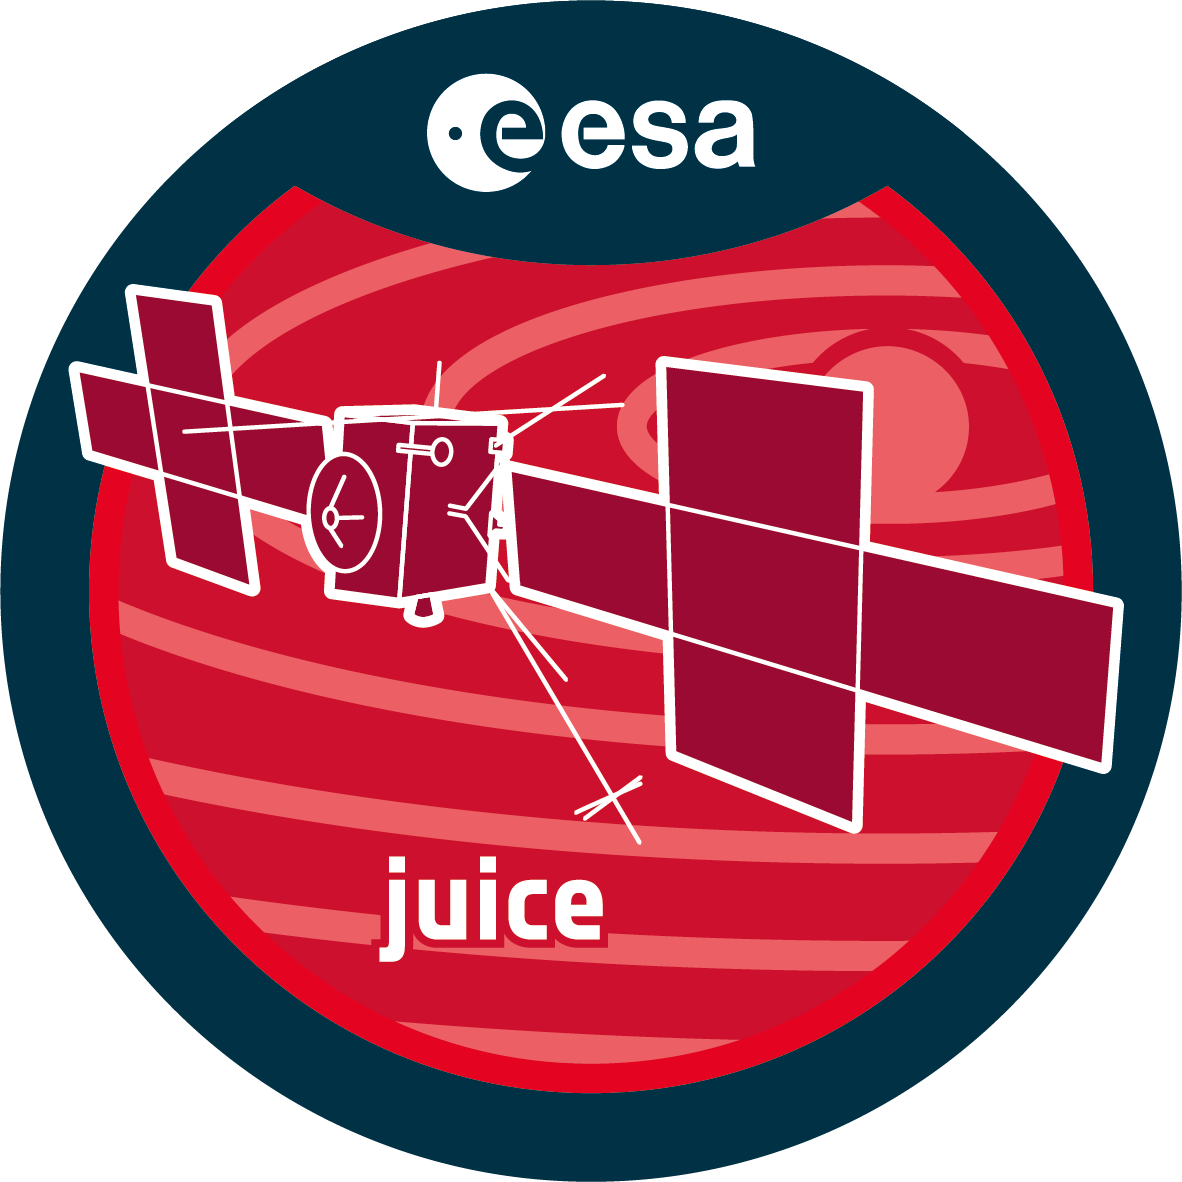 Mission patch for JUICE (JUpiter ICy moons Explorer)